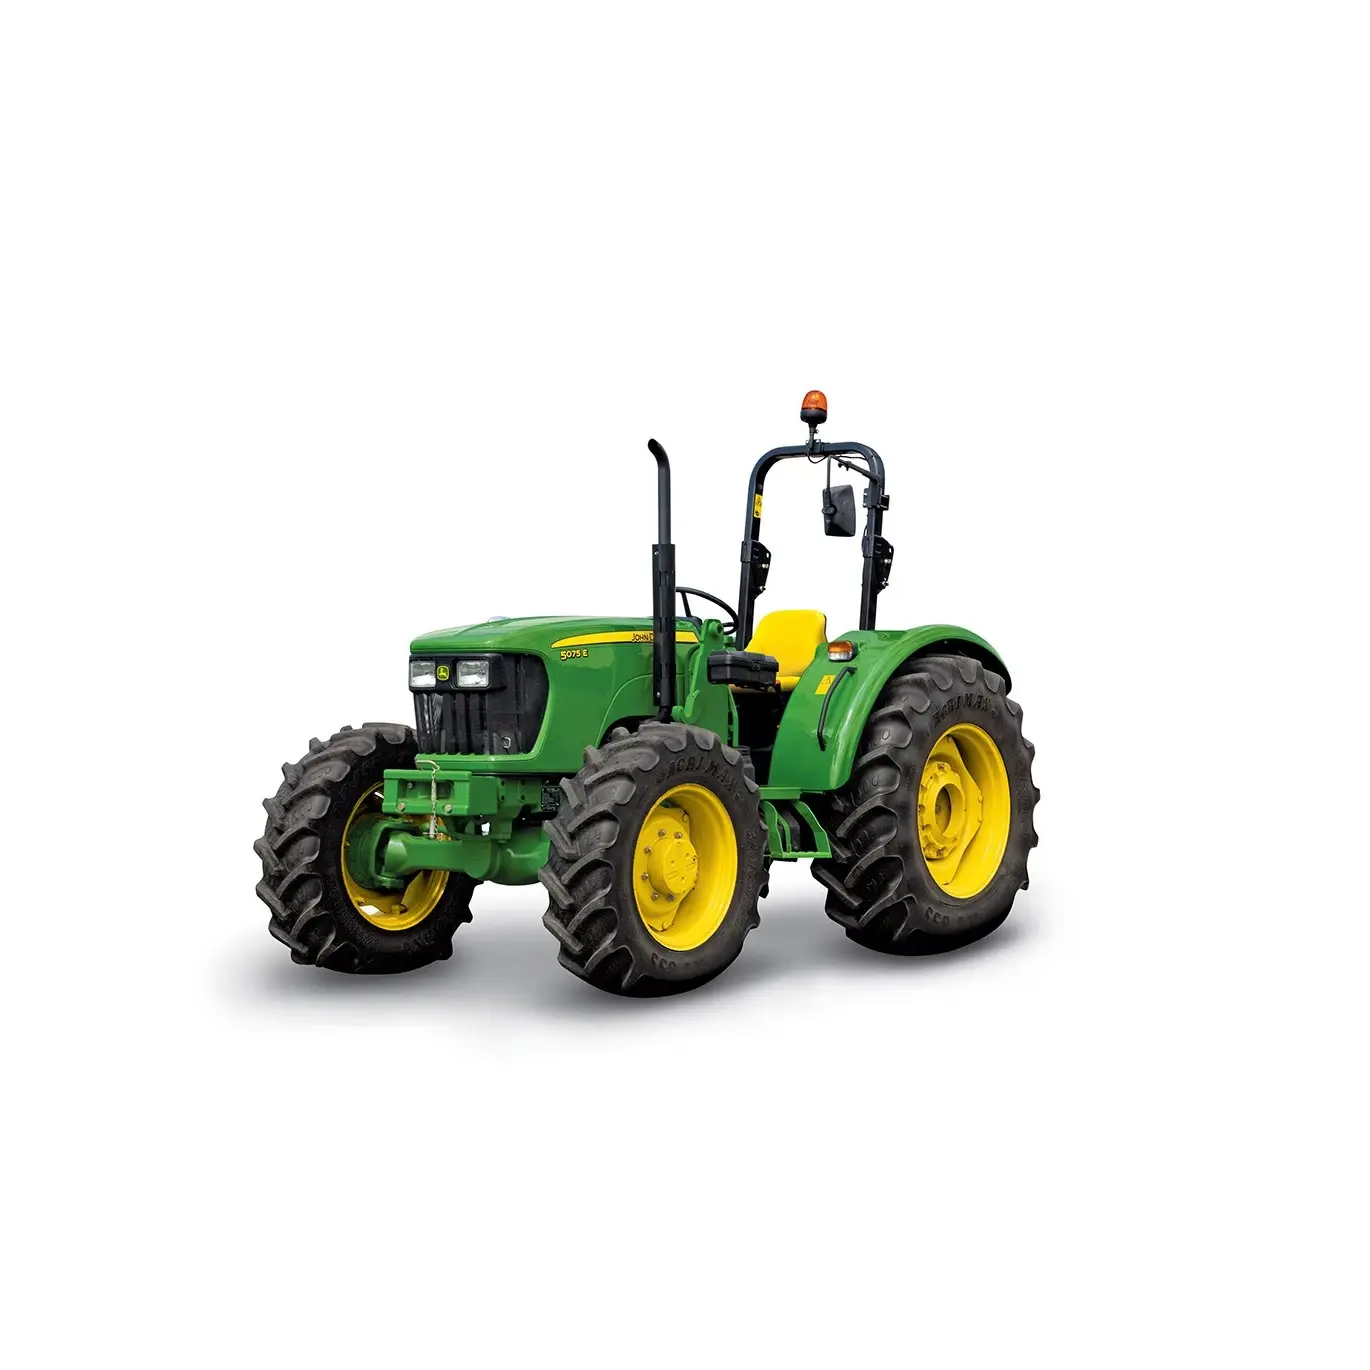 4X4 traktor kuat berkinerja tinggi untuk penggunaan industri pertanian tersedia untuk ekspor dari eksportir India